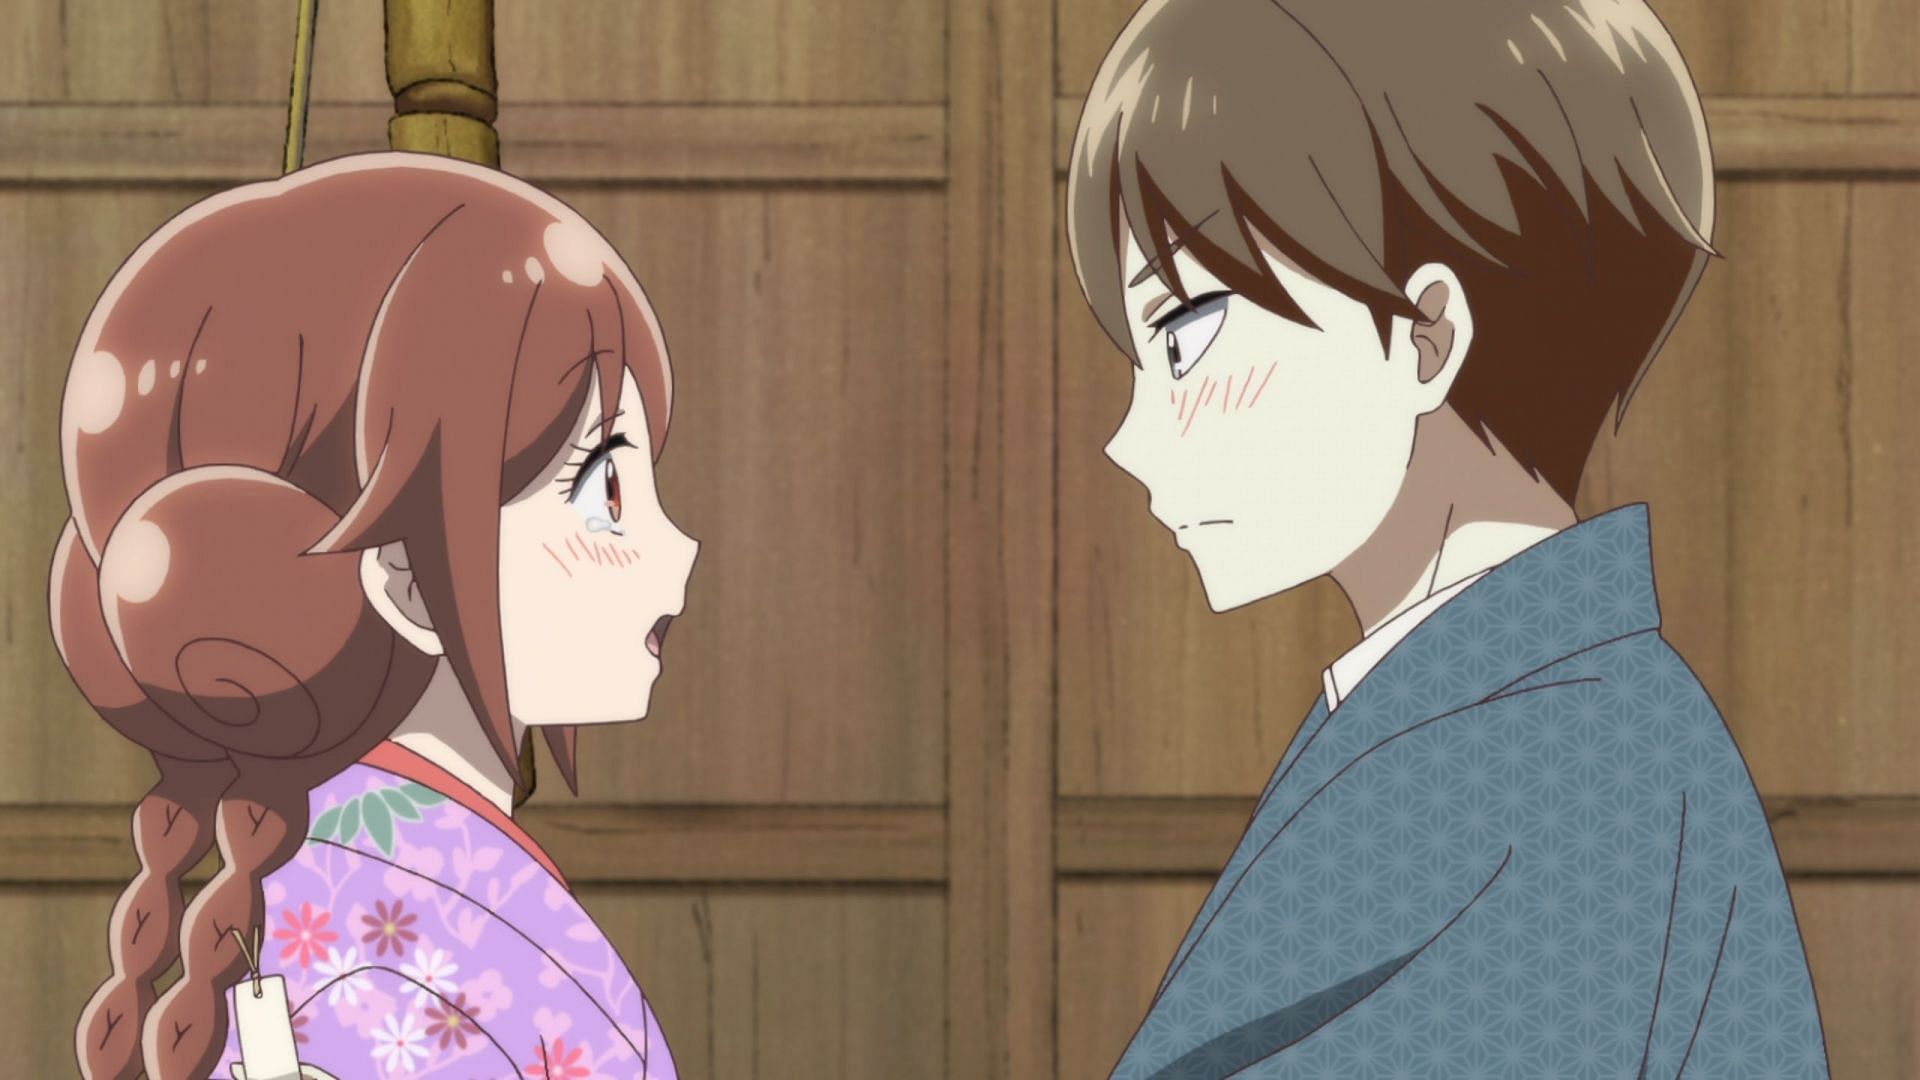 Premium AI Image | Anime Couple having Romance Cinematic Way and  Butterflies Surrounding Them